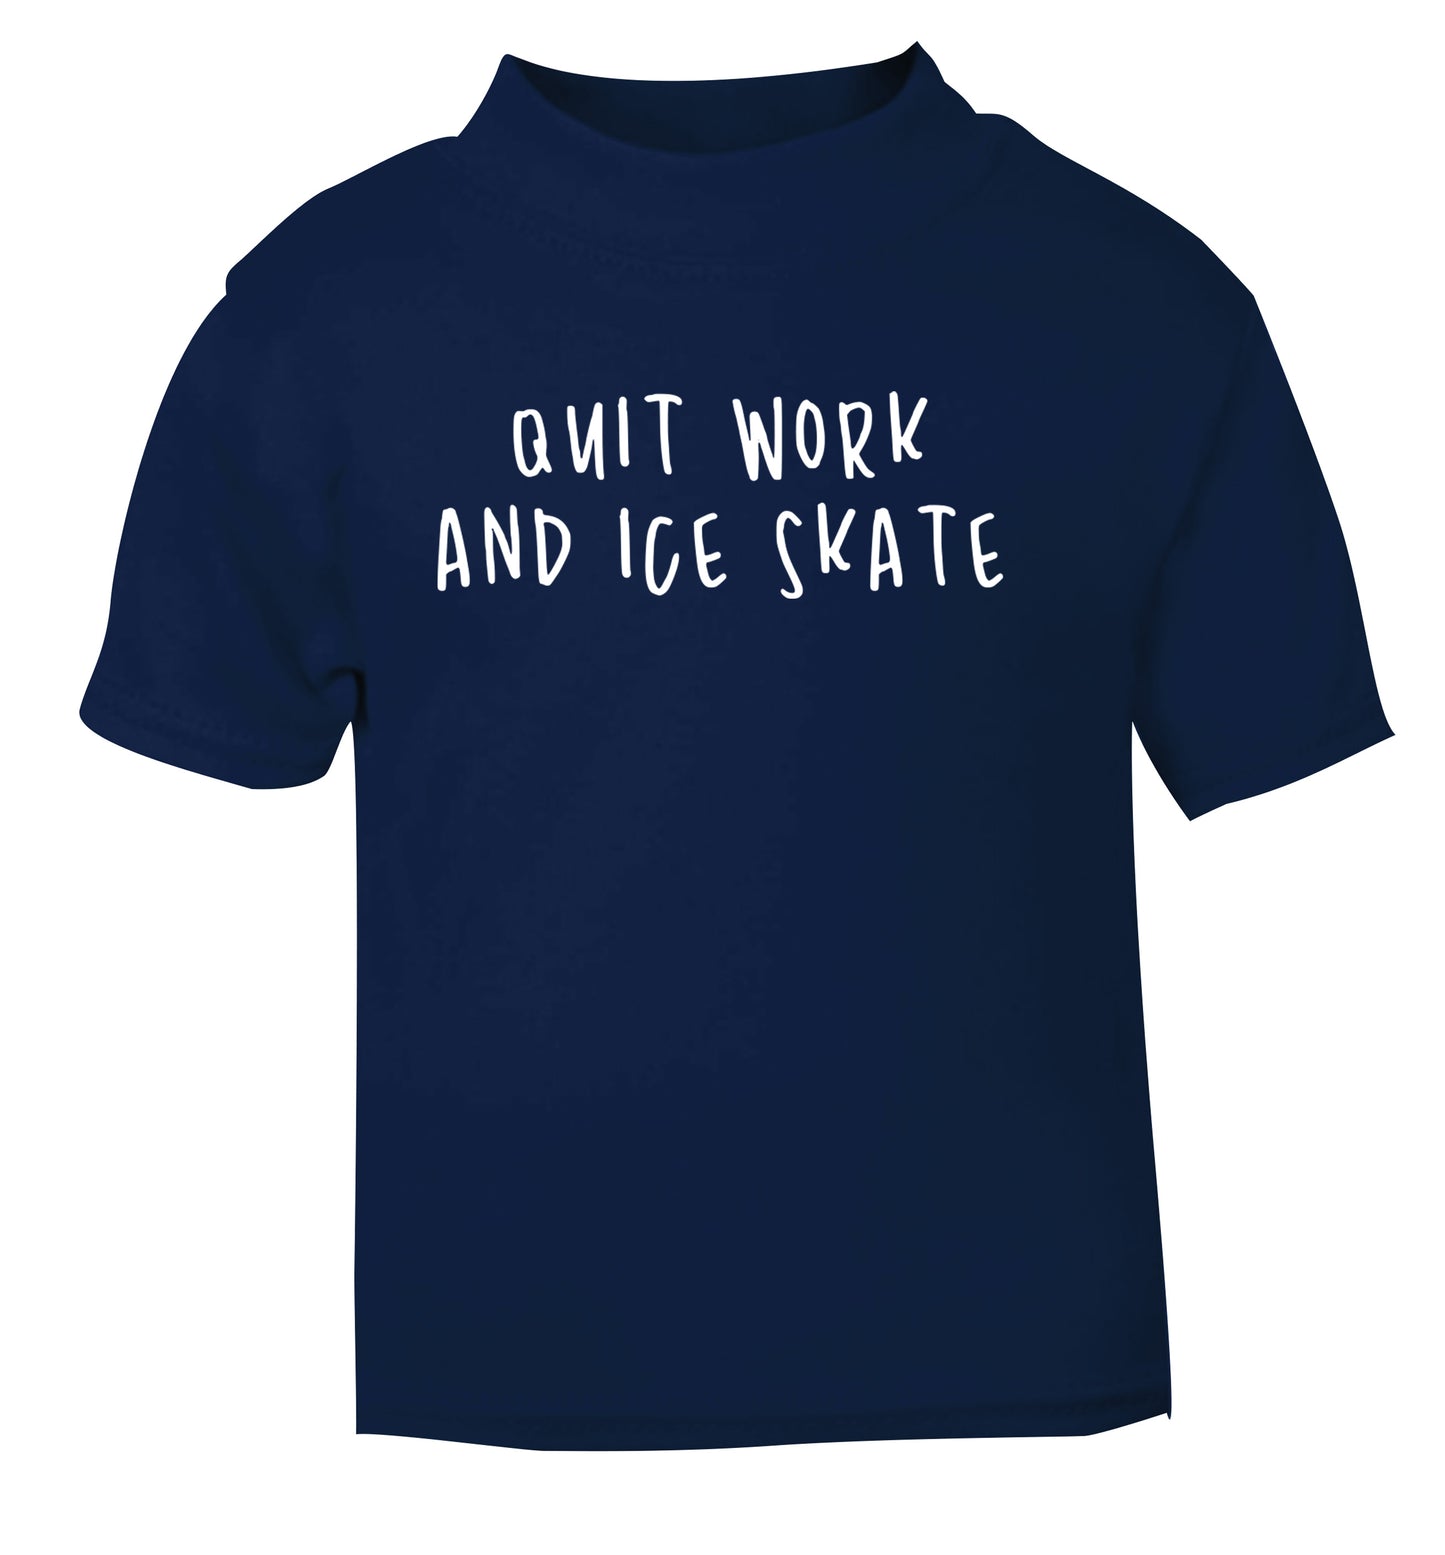 Quit work ice skate navy Baby Toddler Tshirt 2 Years